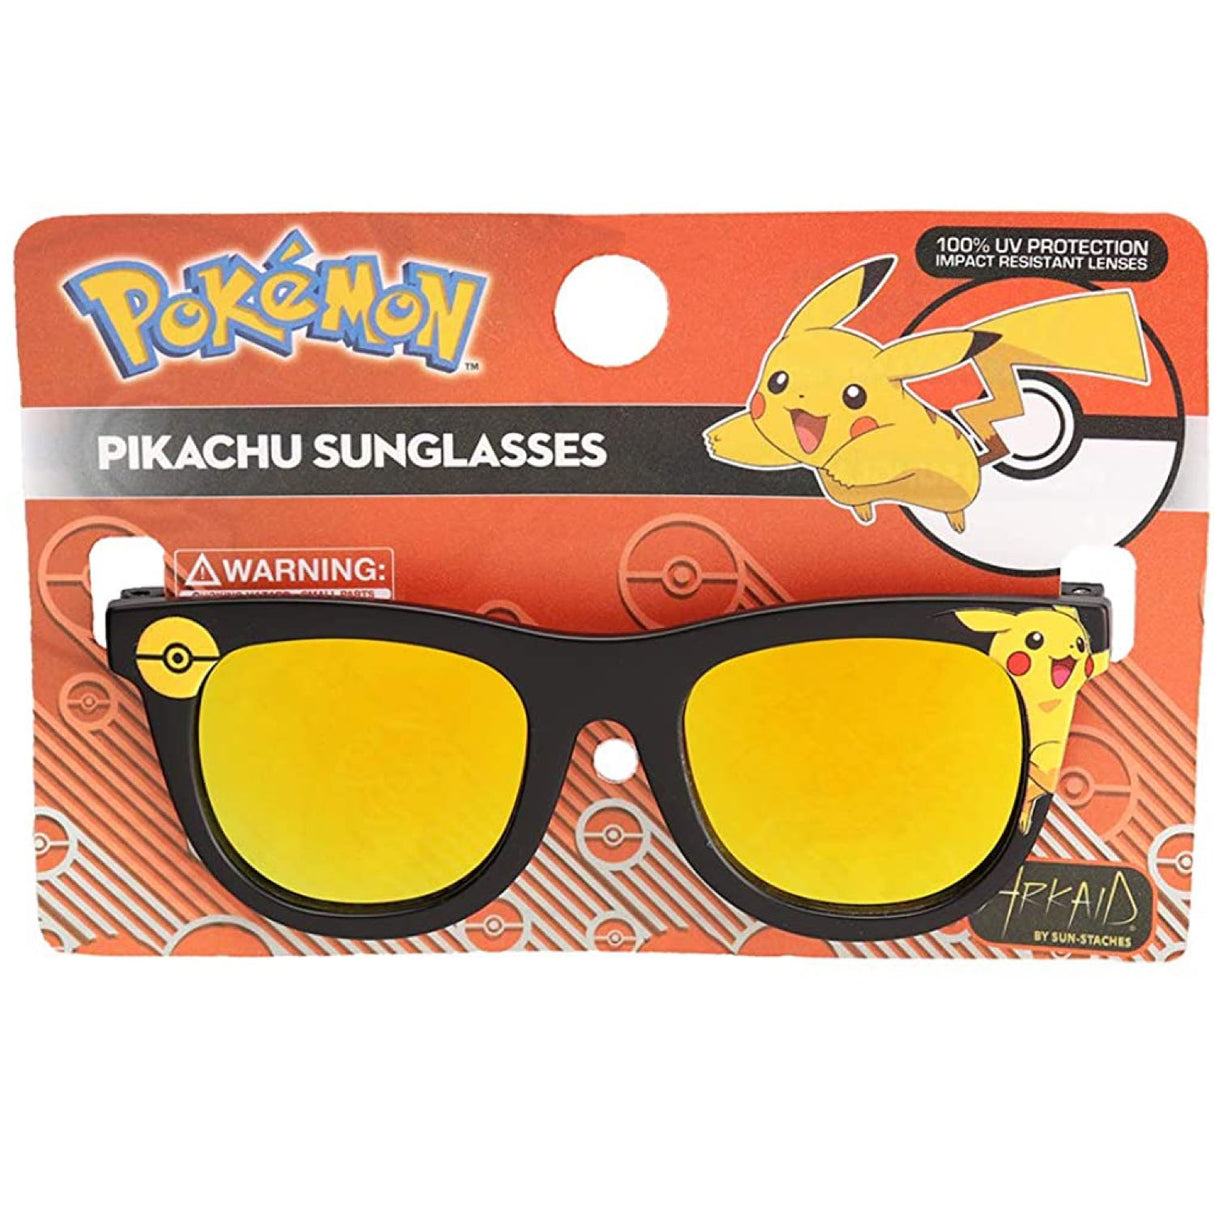 Arkaid Pokemon Pikachu Sunglasses